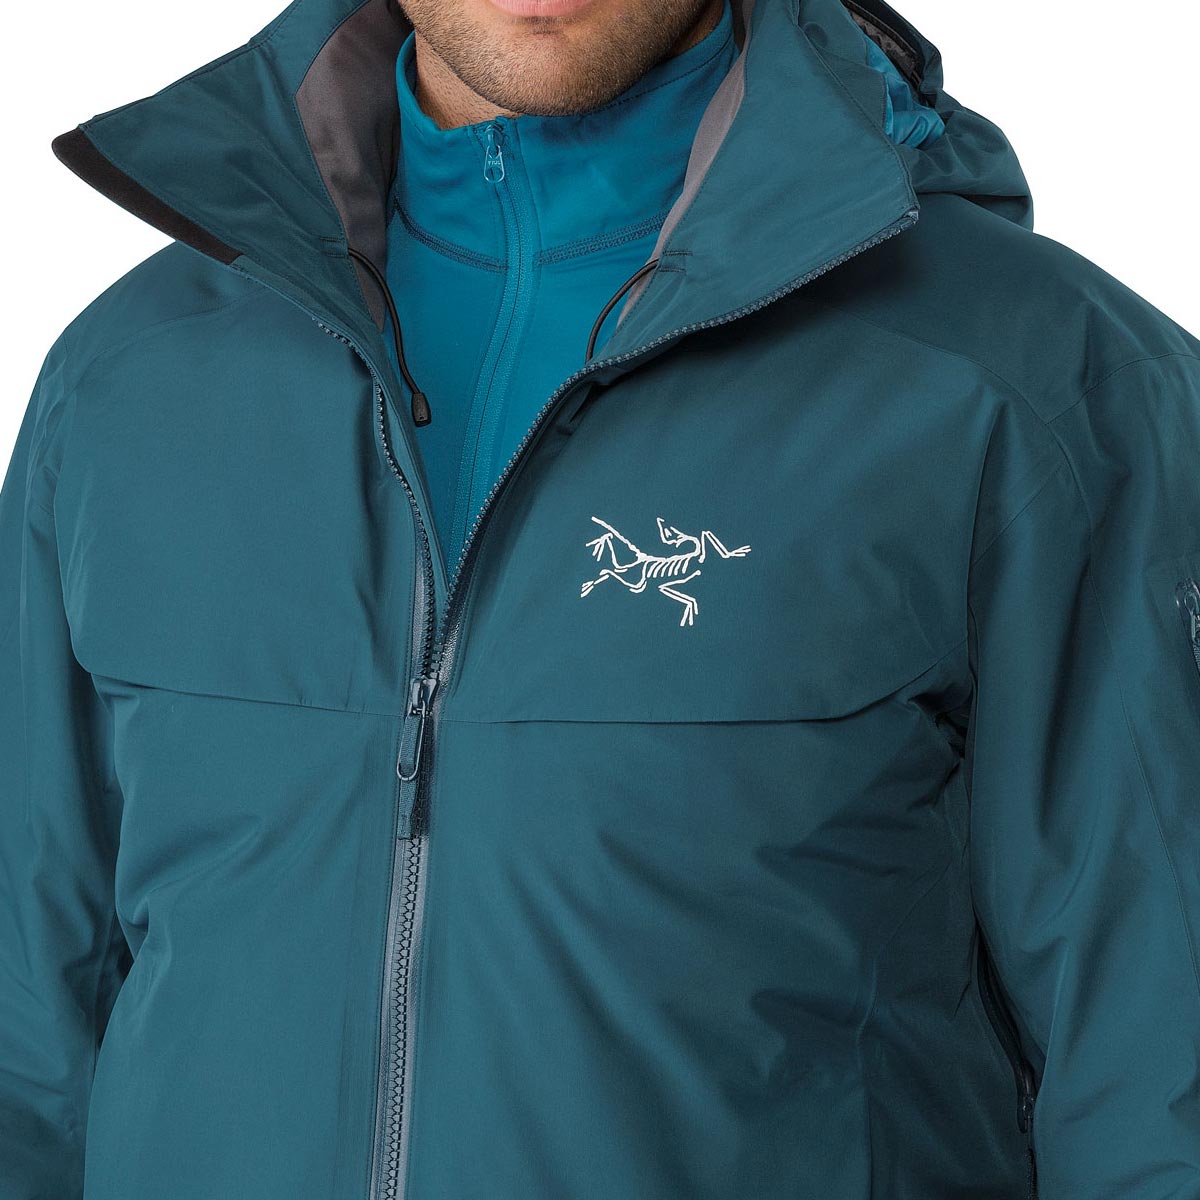 Arc'teryx Macai Jacket, men's, discontinued Fall 2016 colors (free 